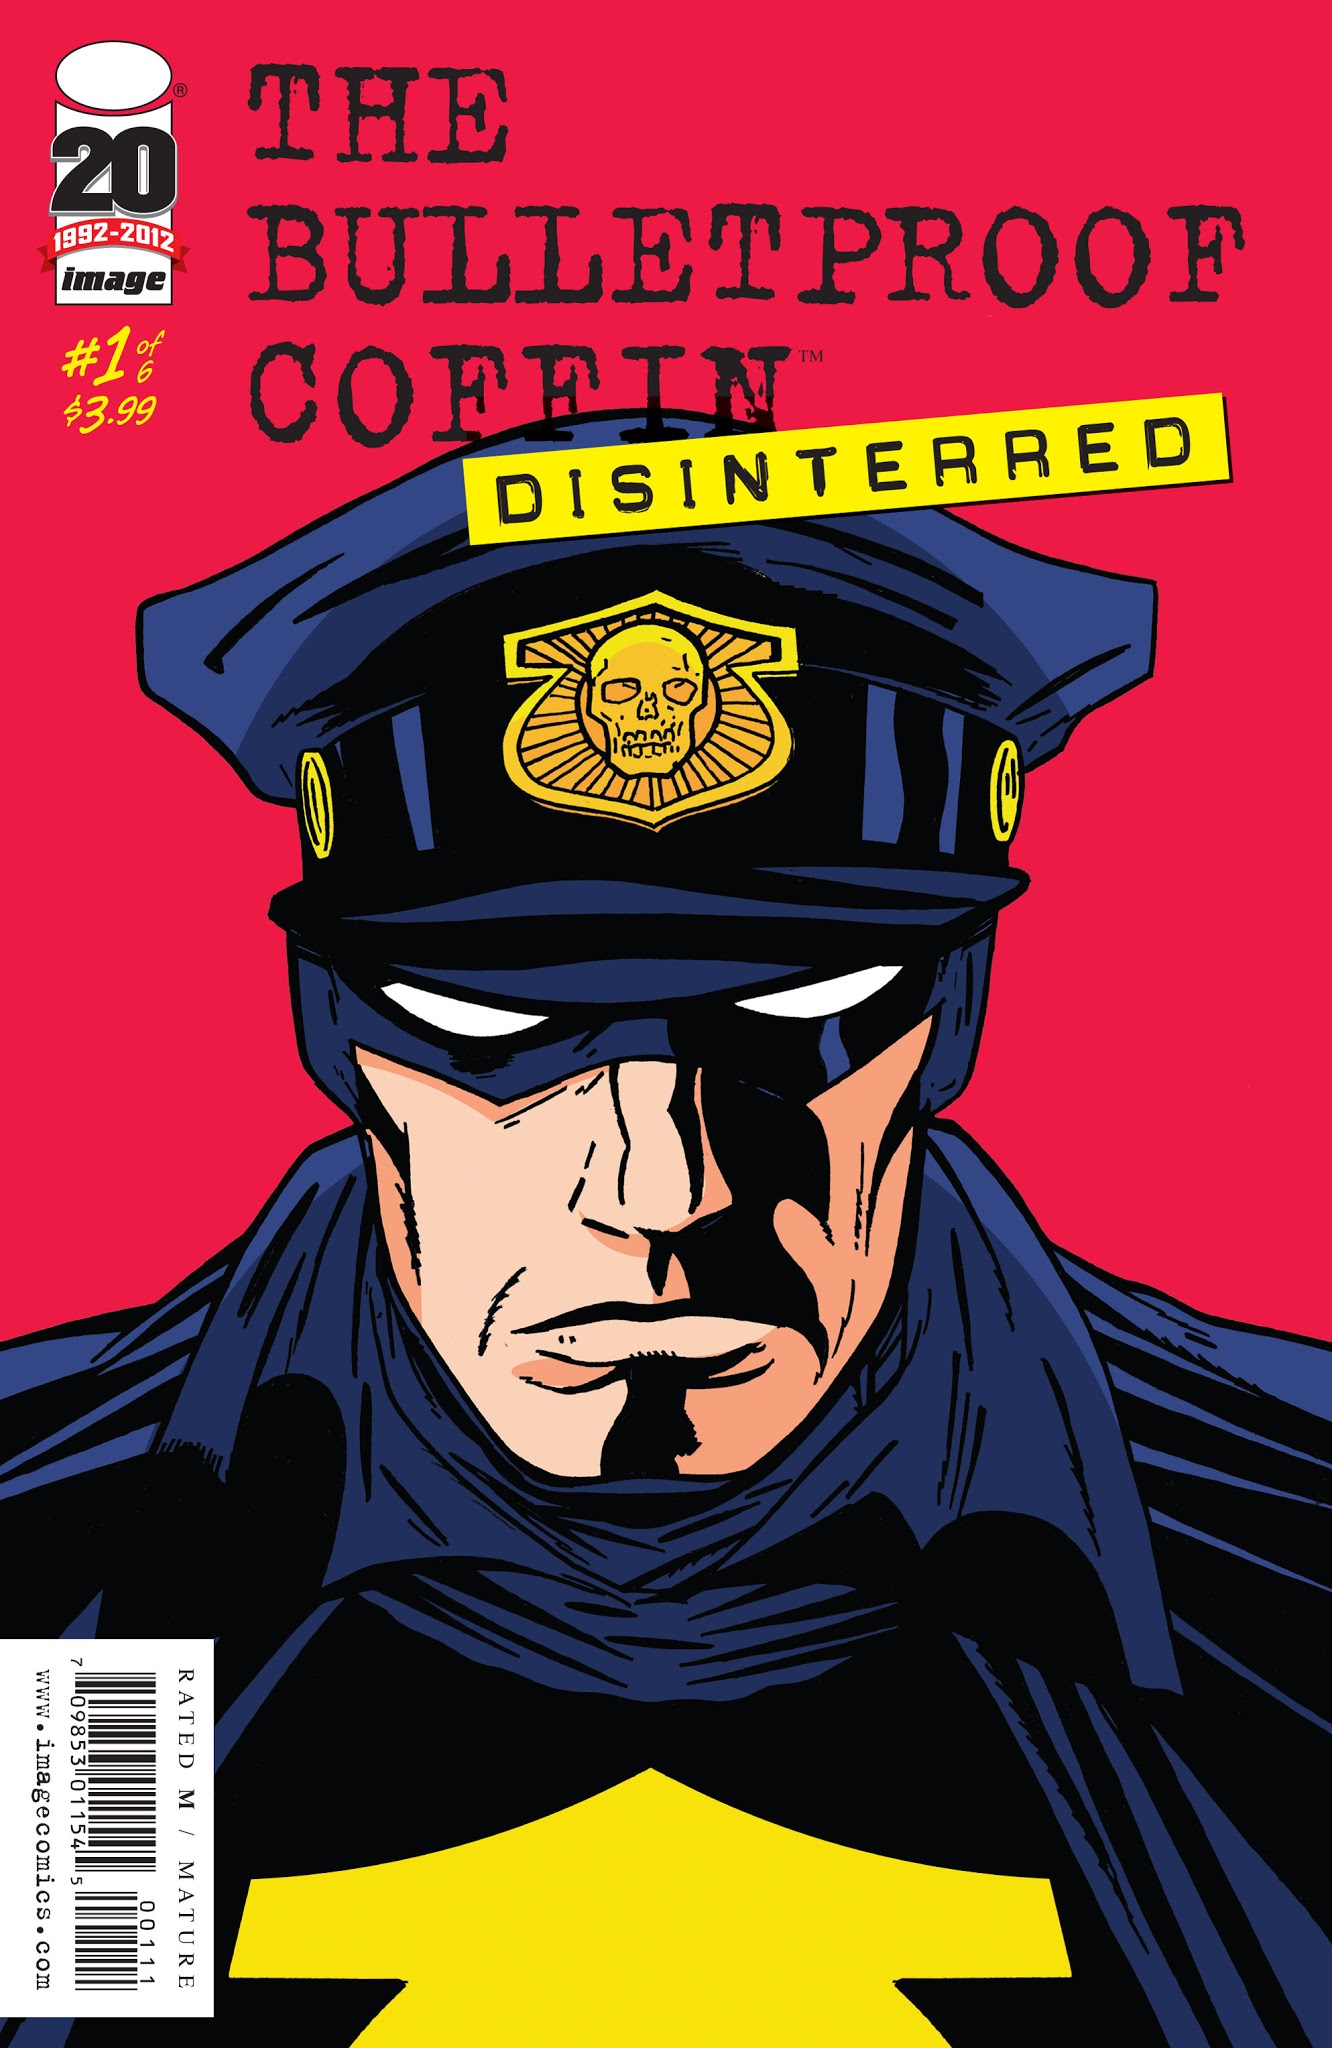 Read online Bulletproof Coffin: Disinterred comic -  Issue #1 - 1